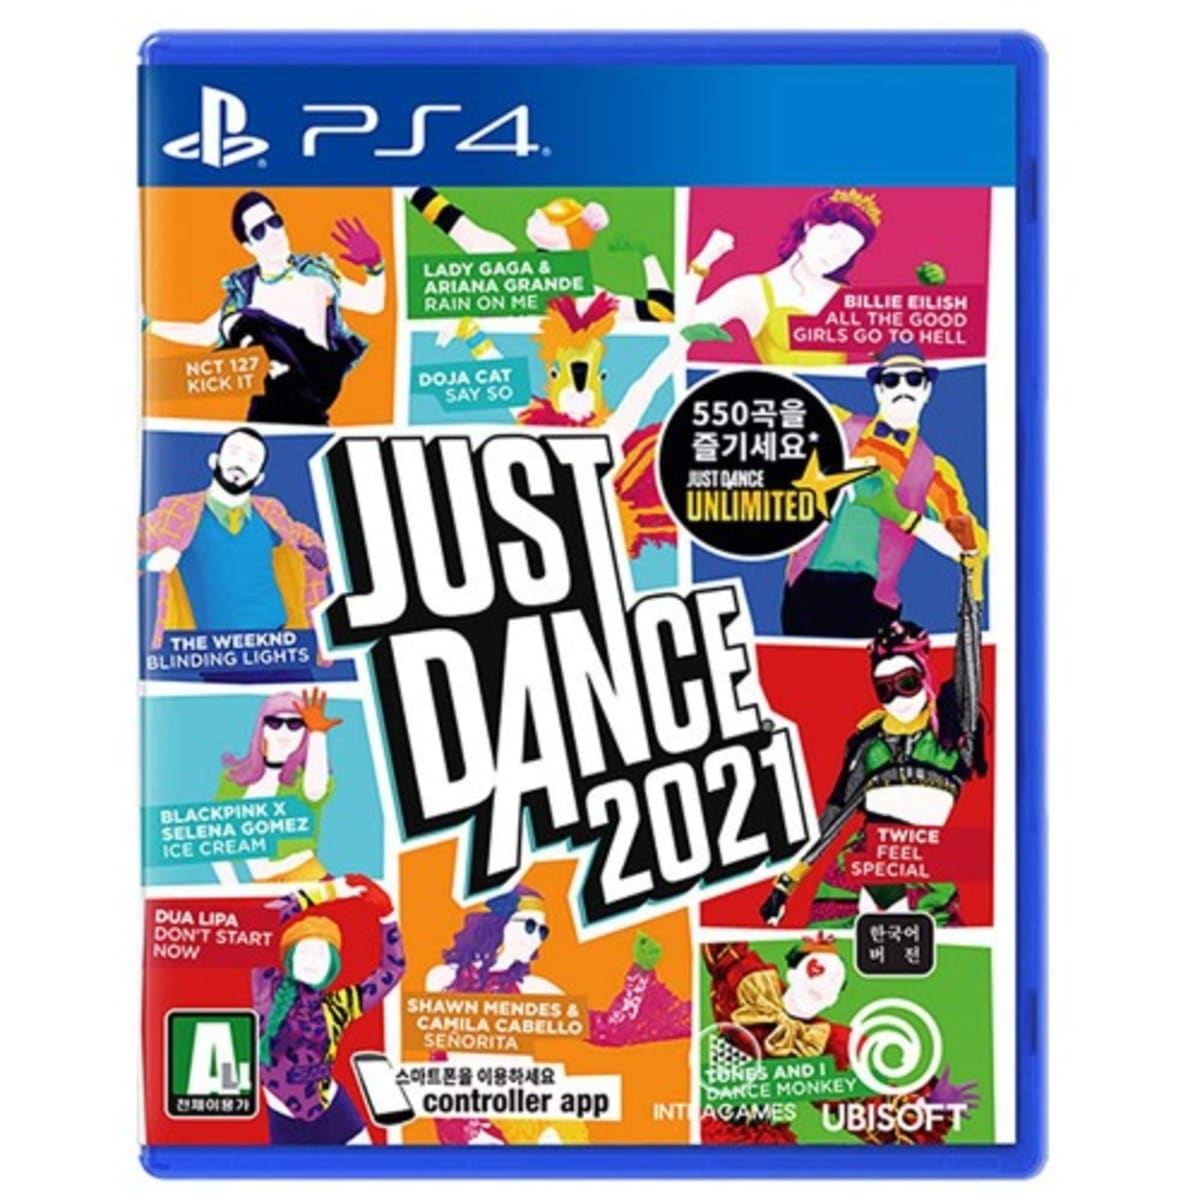 Online Just Playstation For Ubisoft | Shopping Konga 2021 4 Dance